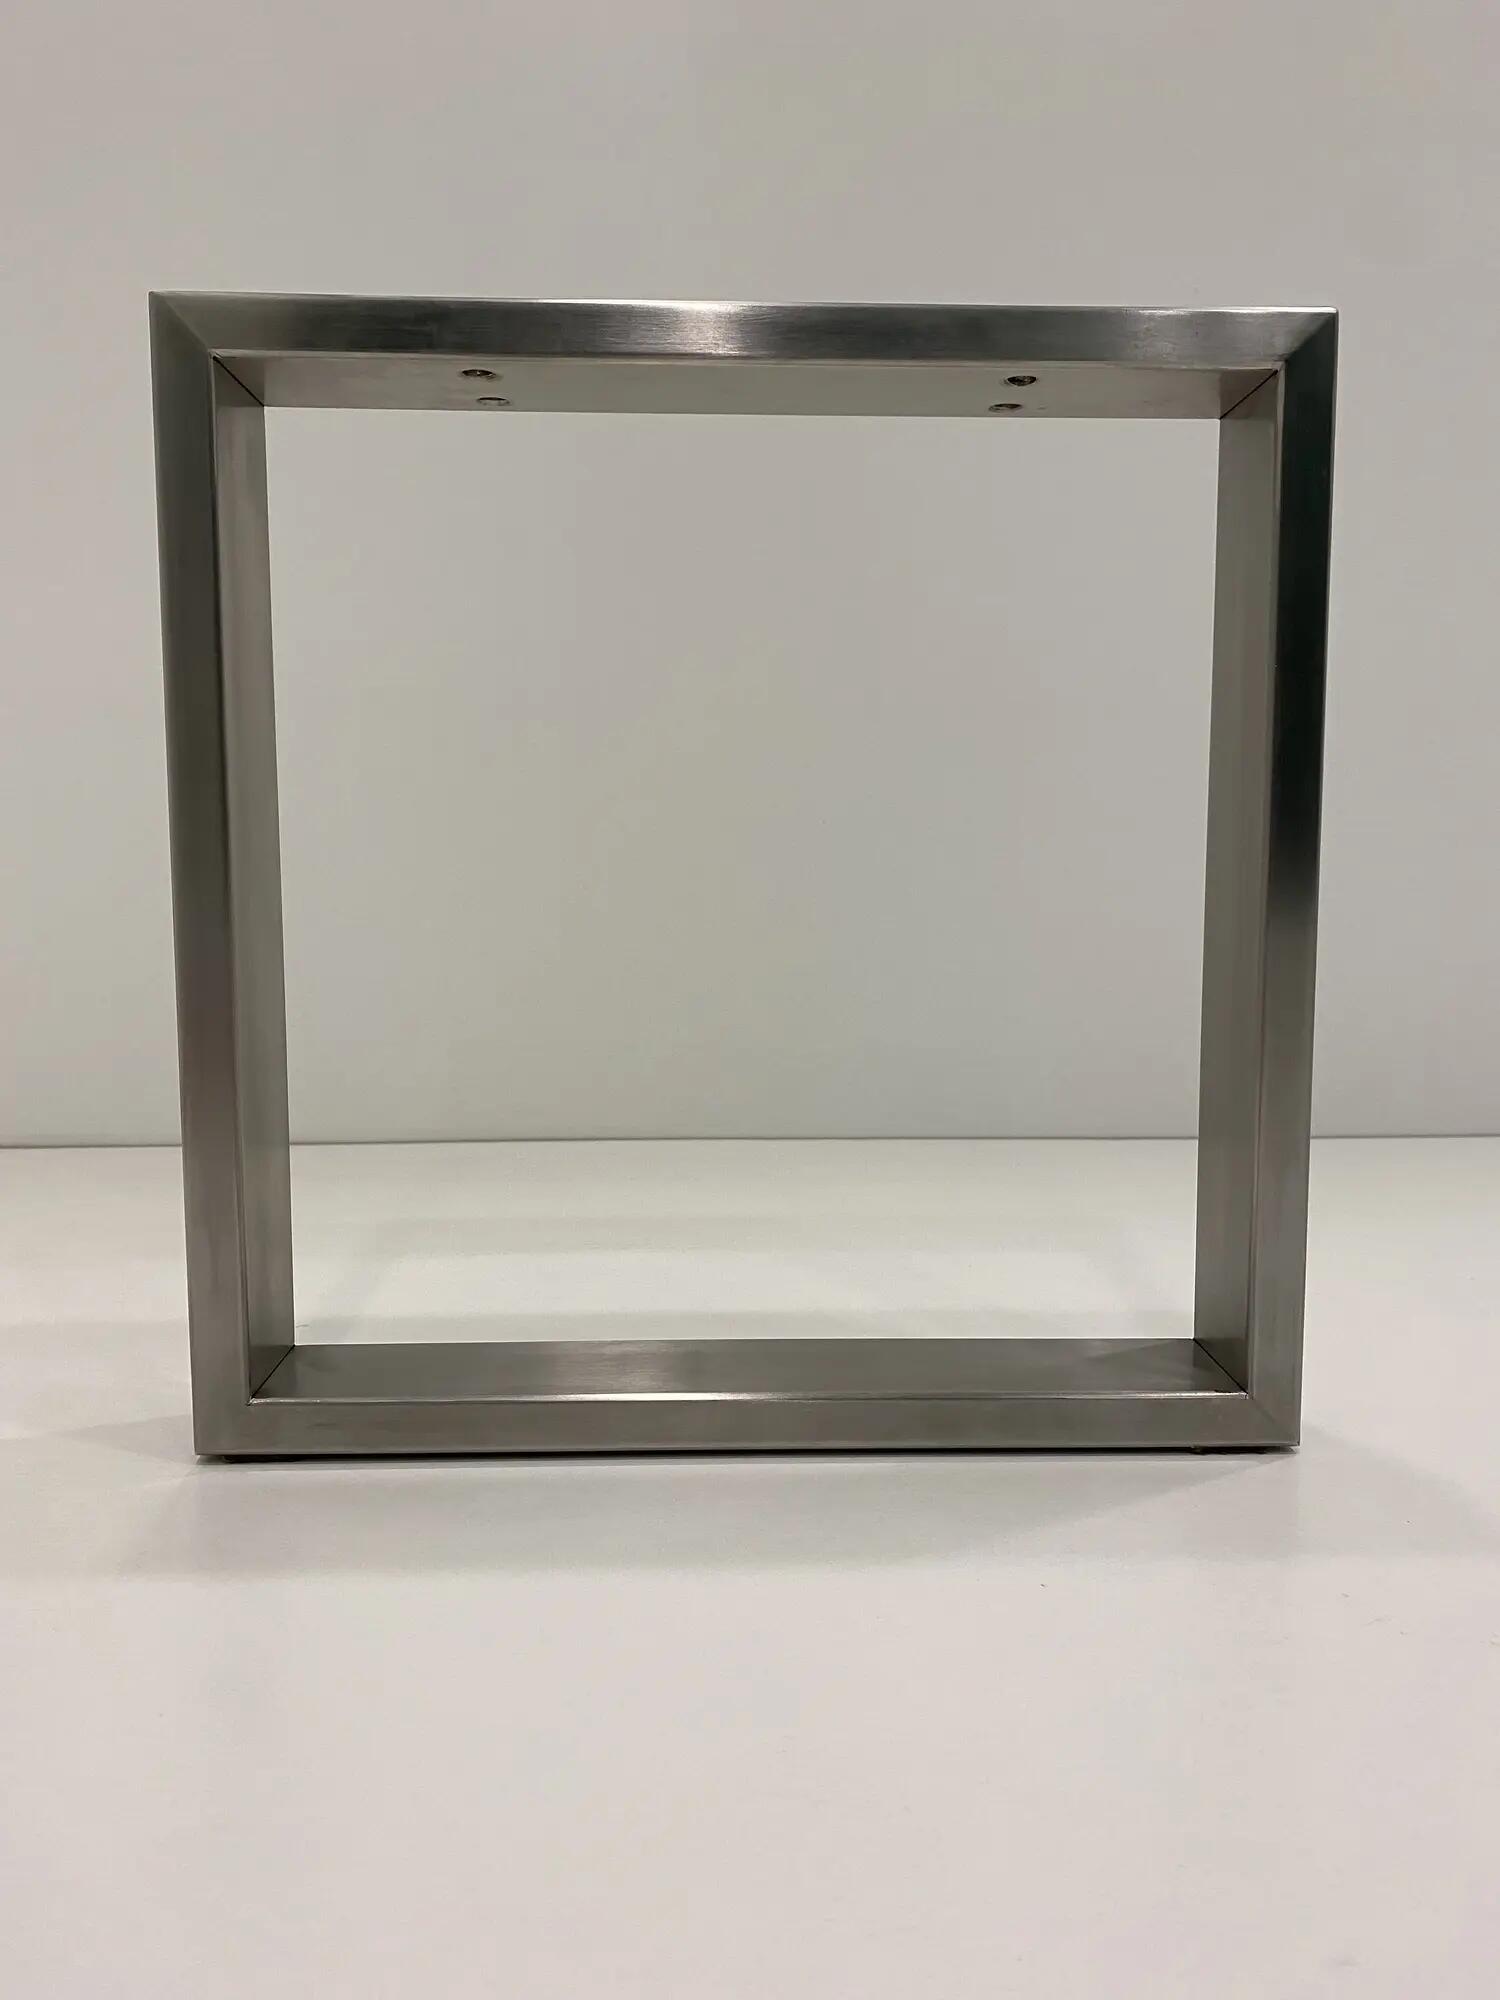 Pata fija rectangular de acero inoxidable brillante para mesa de centro 40x40 mm